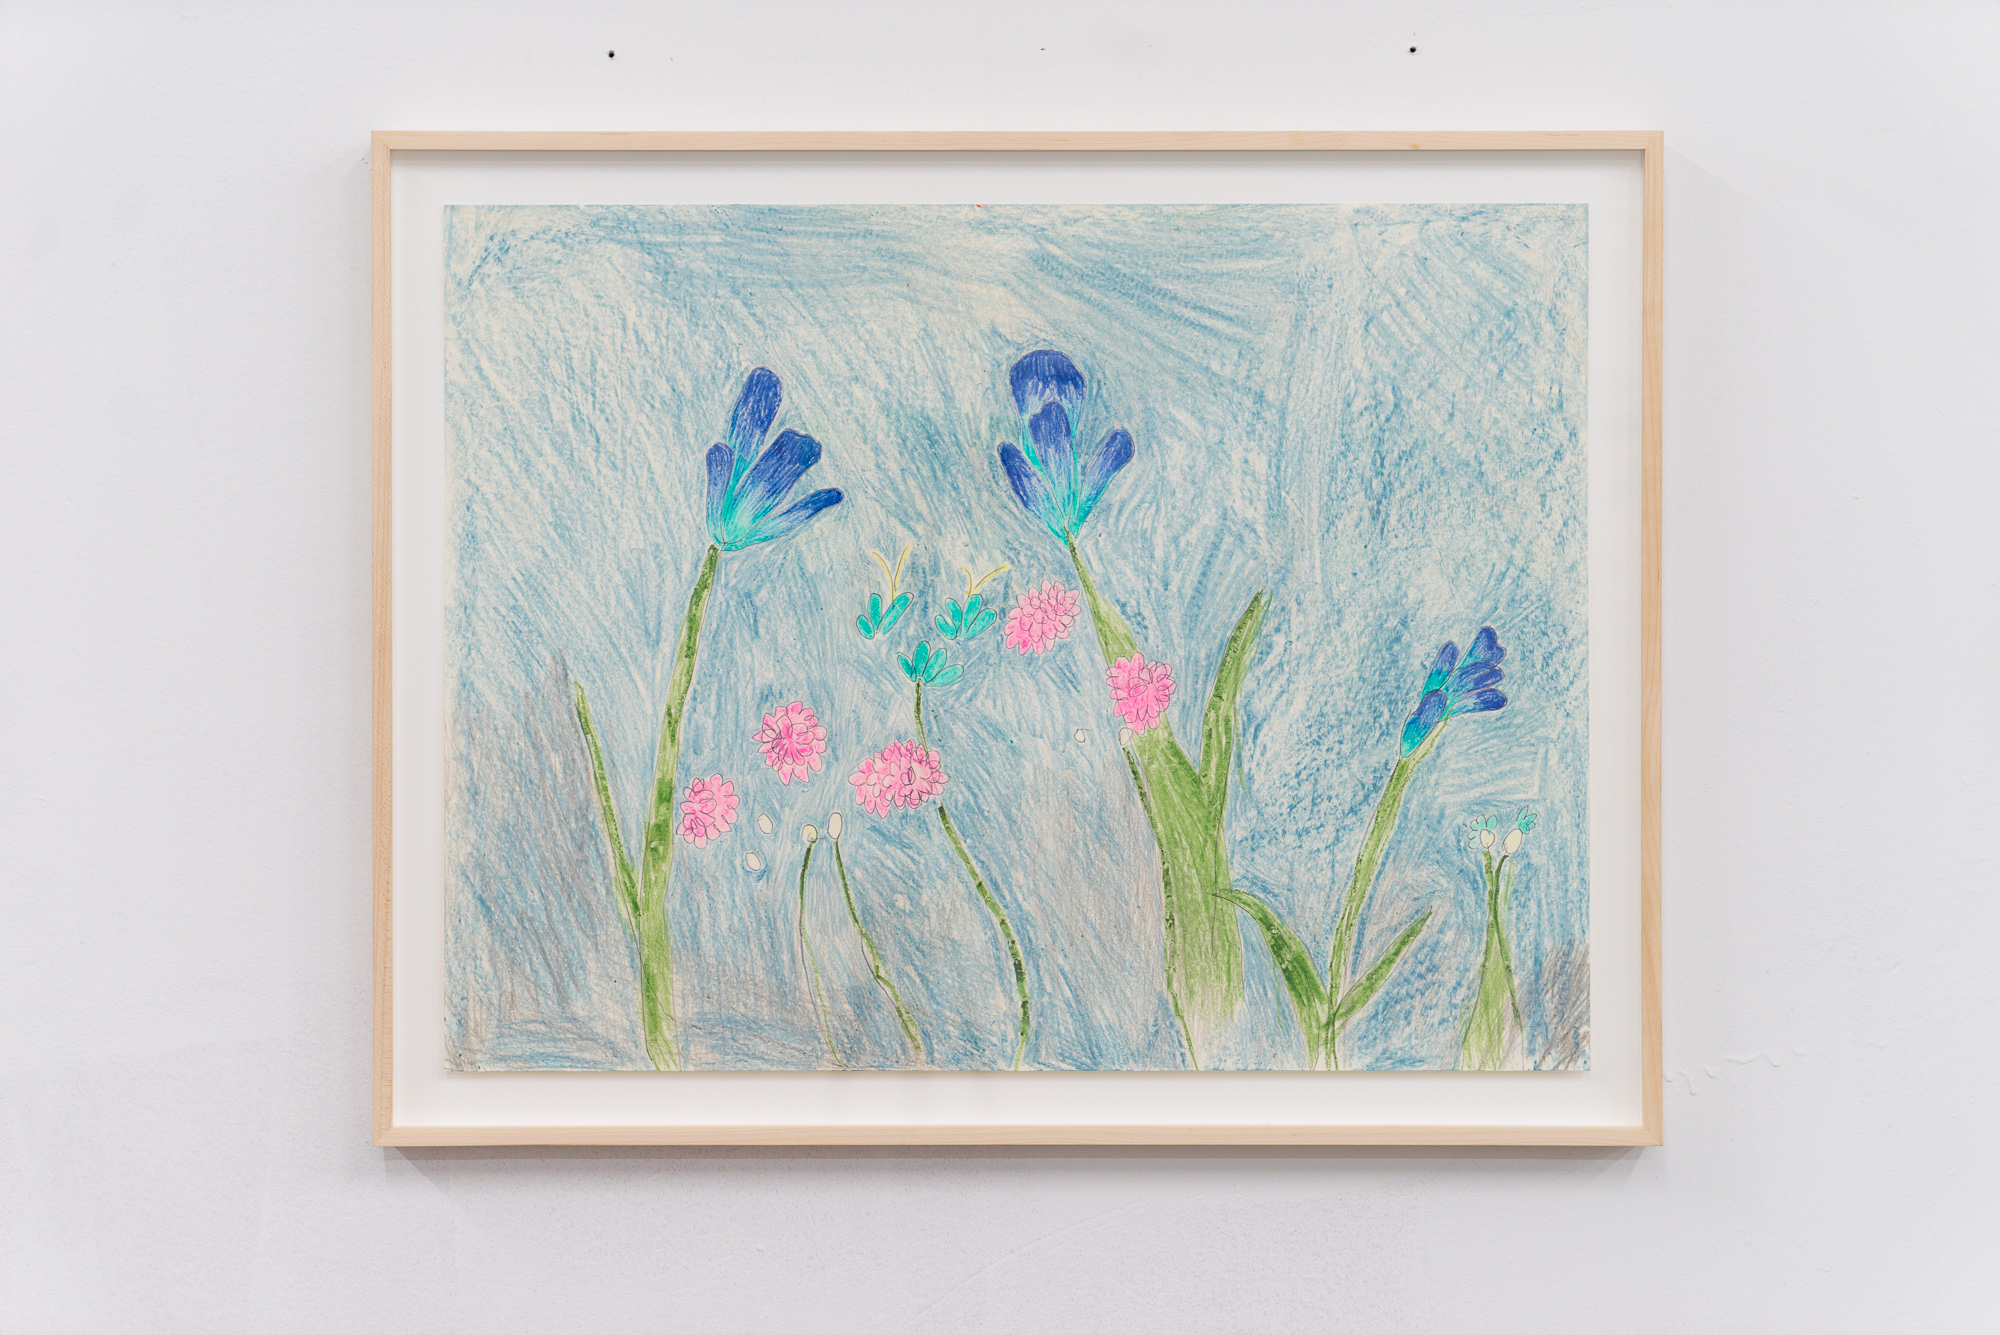  Emilie Gossiaux,  Blue-tiful Garden , 2018, Ink, wax pastel on newsprint, 17 1/2 x 23 inches 